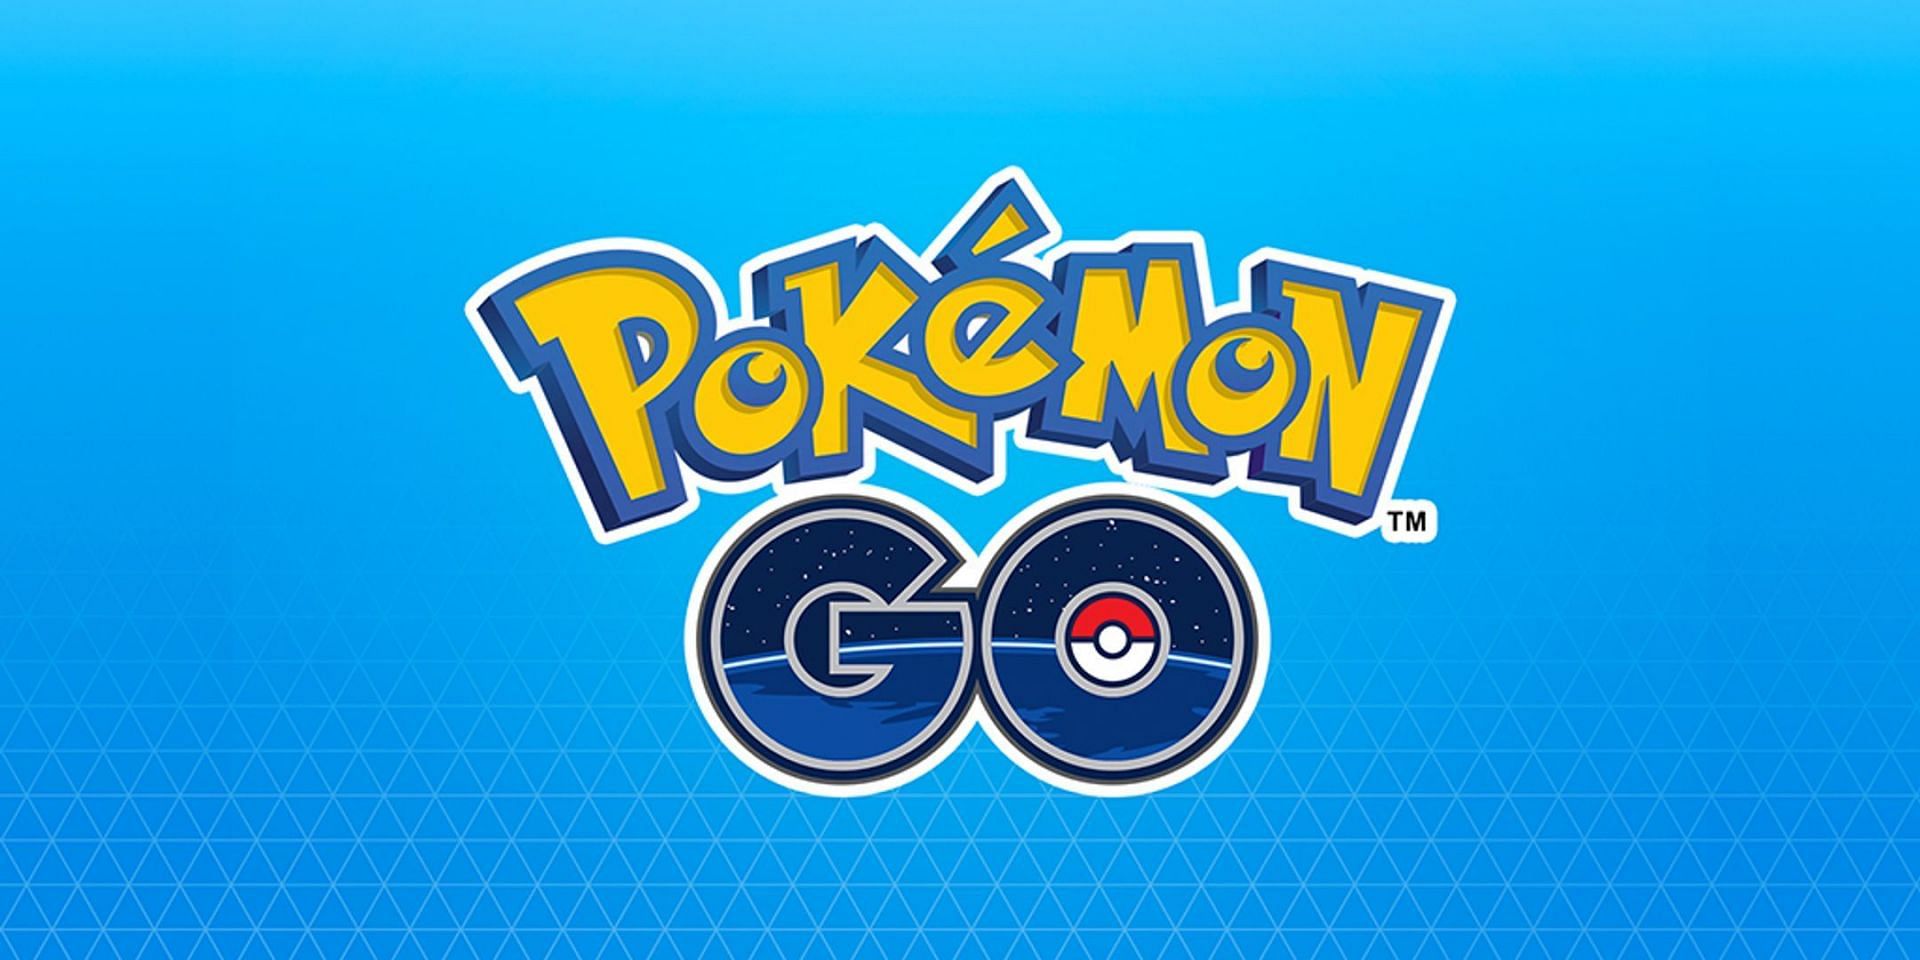 The official logo for Pokemon GO (Image via Niantic)